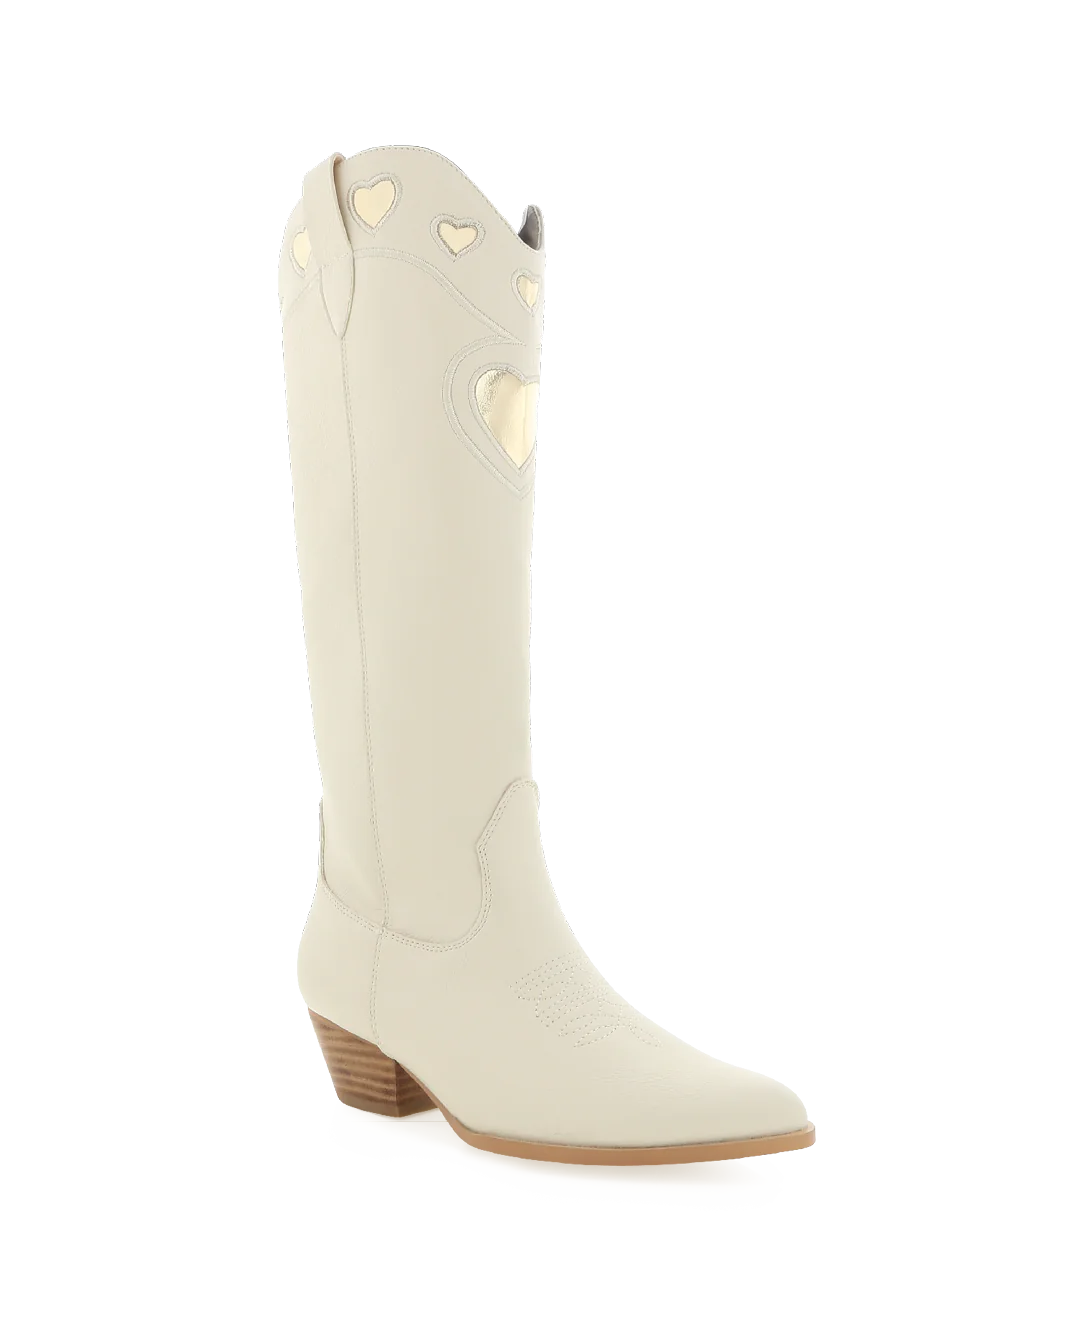 Ivory Velma Heart Boots by Billini